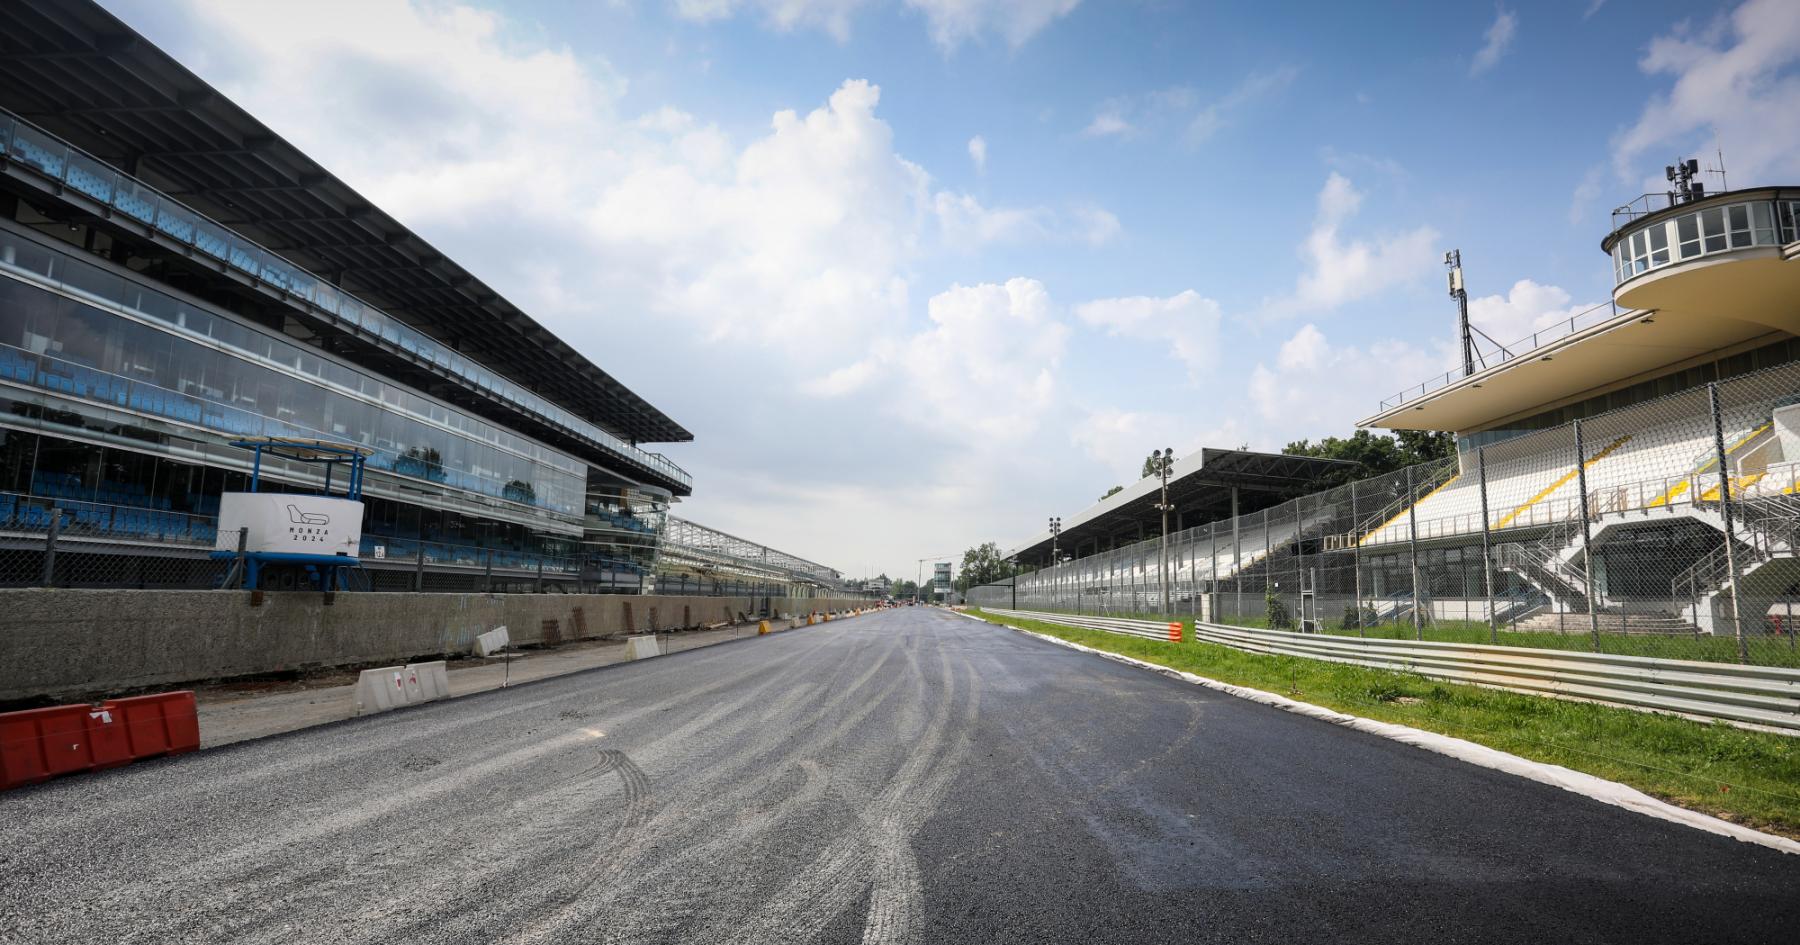 Monza's Monumental Effort: An Ambitious Multi-Million-Dollar Rebuild to Preserve Grand Prix Legacy